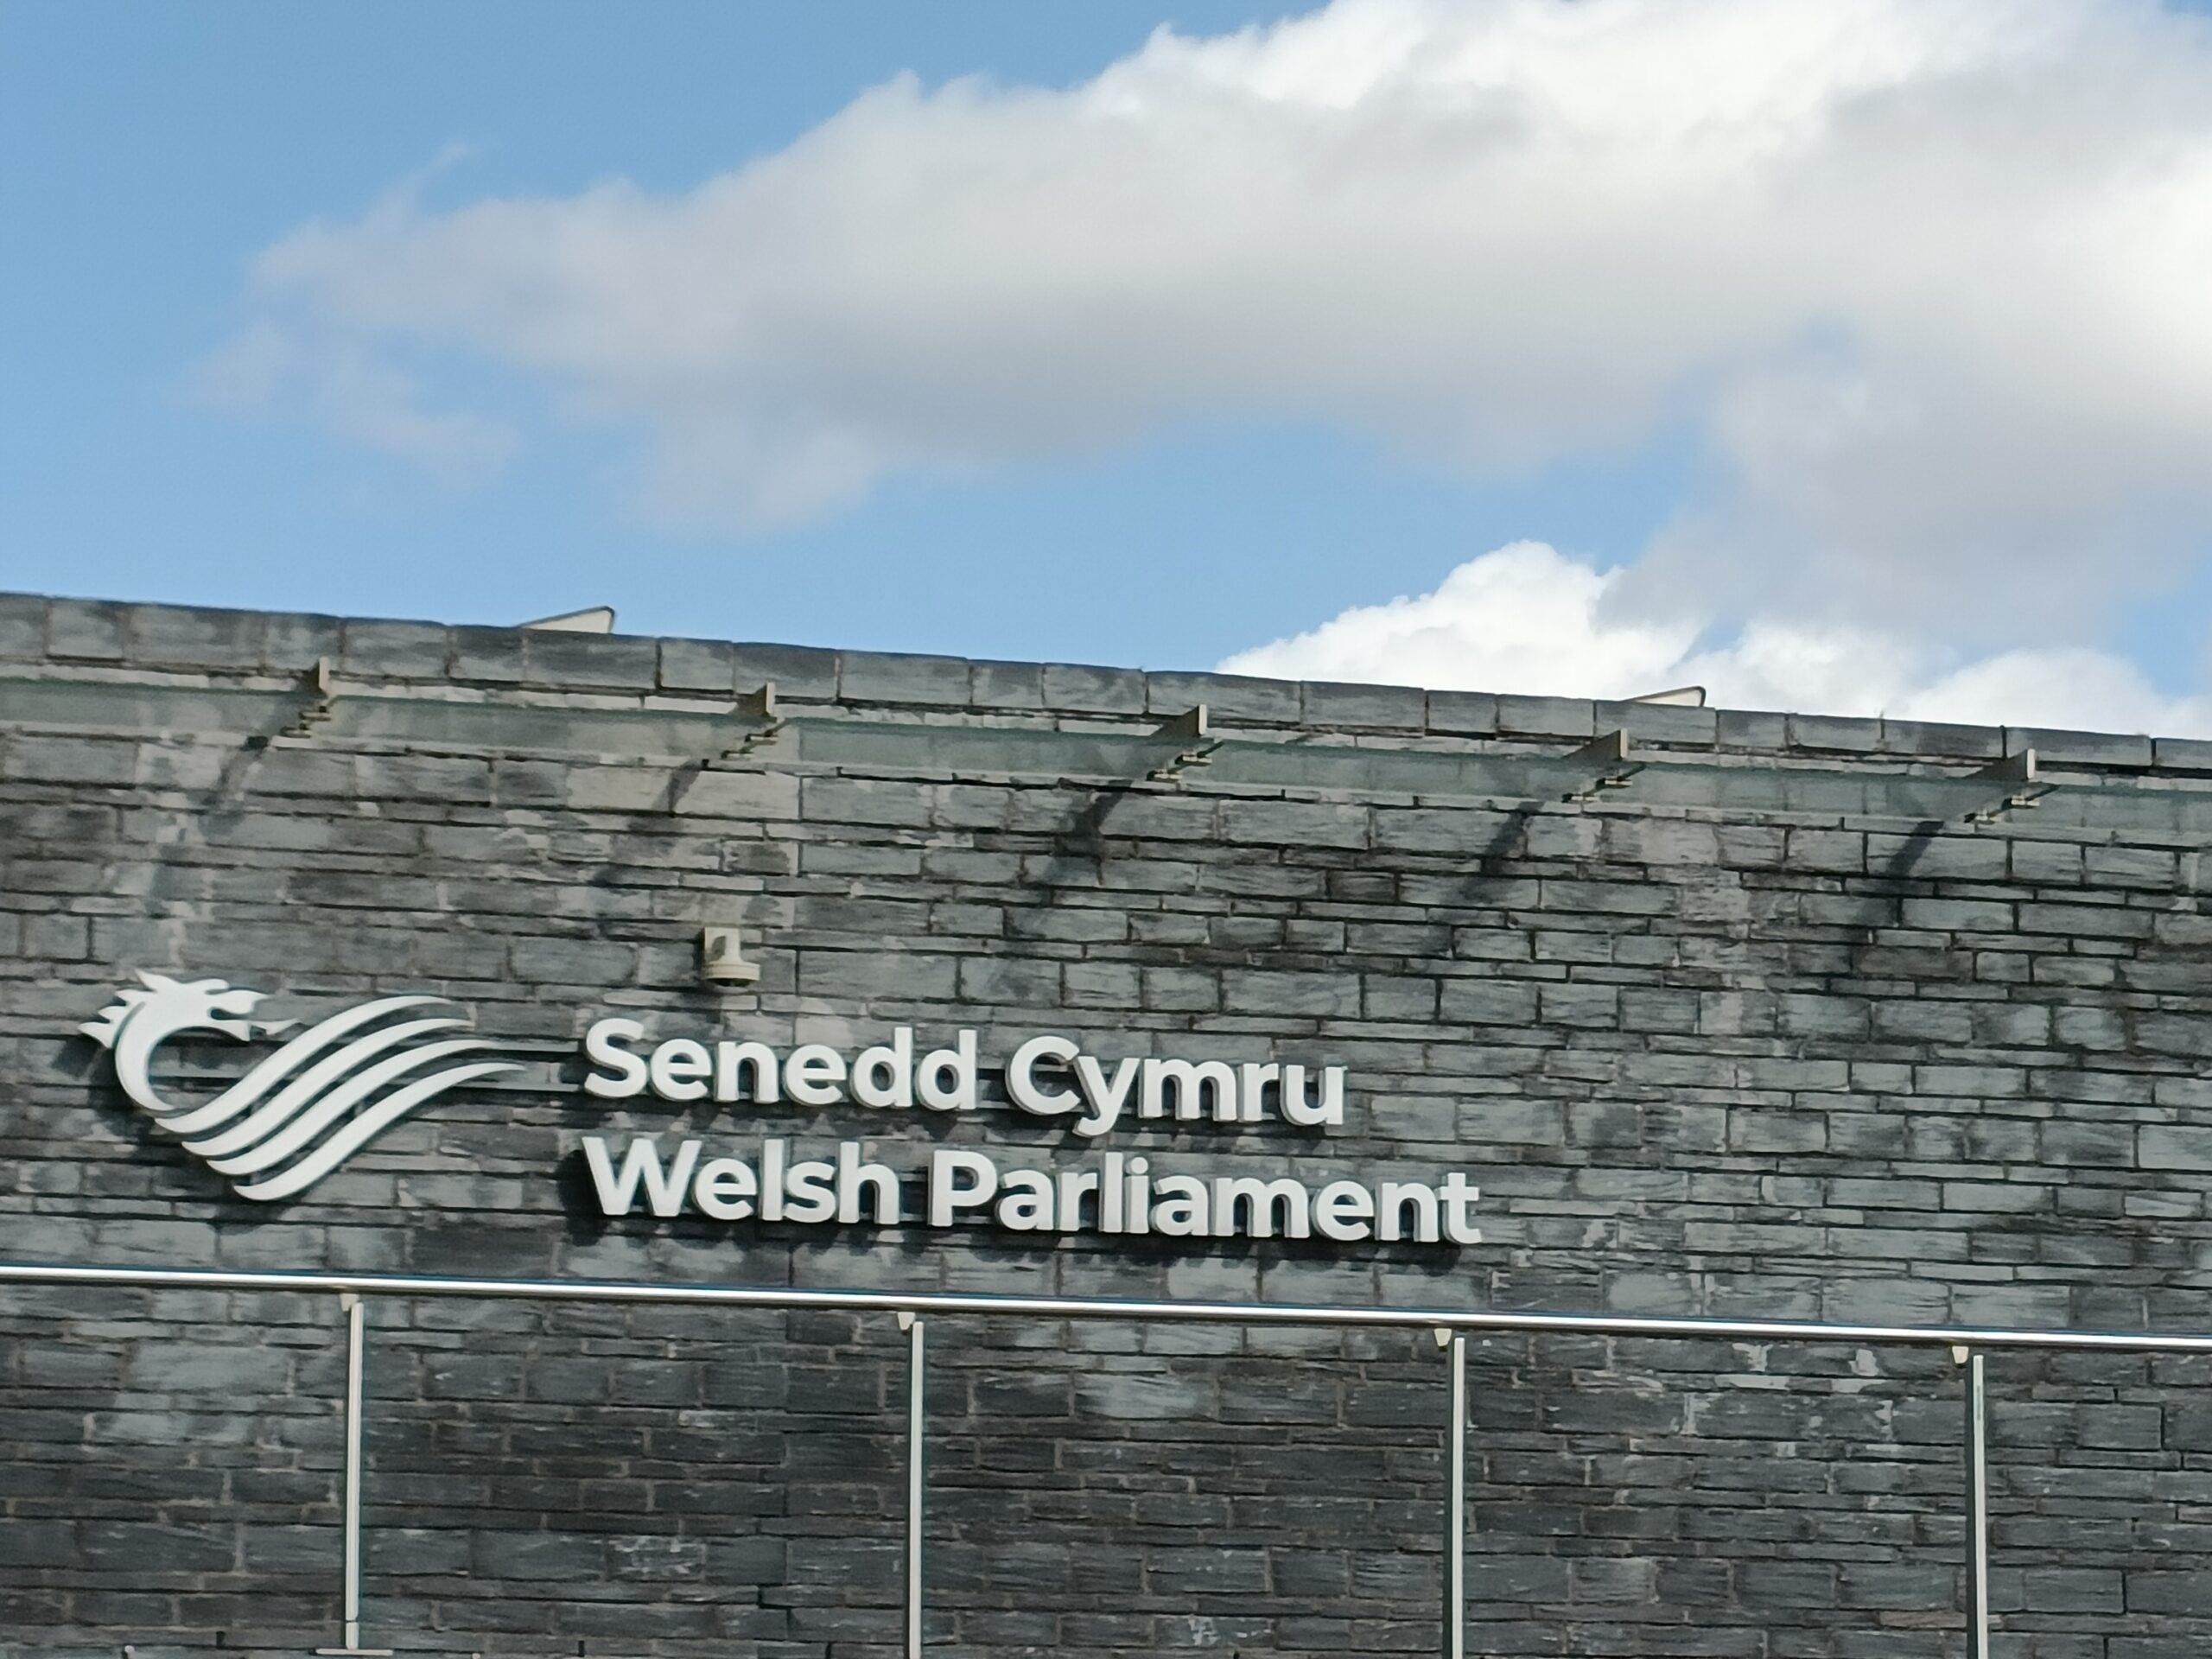 “It’s not adding up”: Vast discrepancies in Labour budget says Plaid Cymru